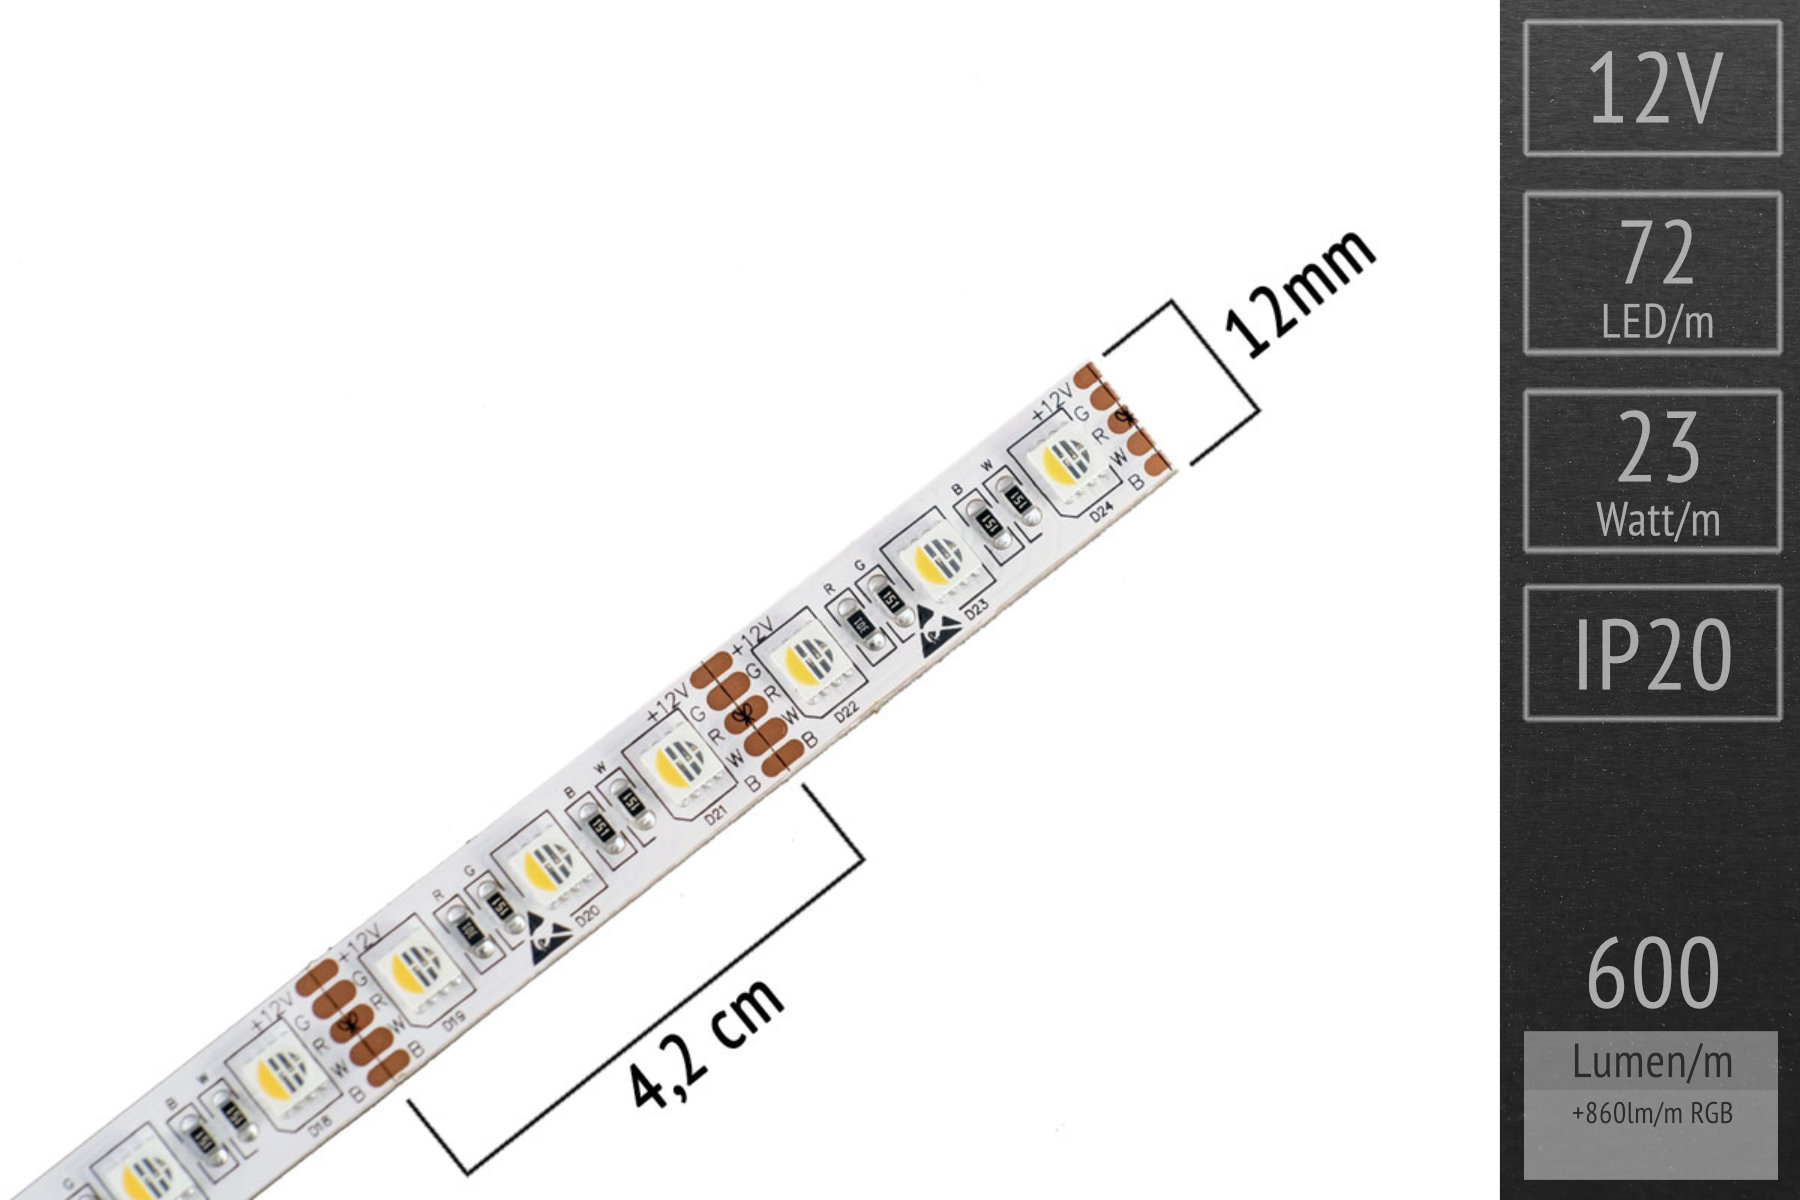 RGBWW for accent lighting: 4in1 LEDs - 72 LEDs/m - 12V - IP20 10m roll